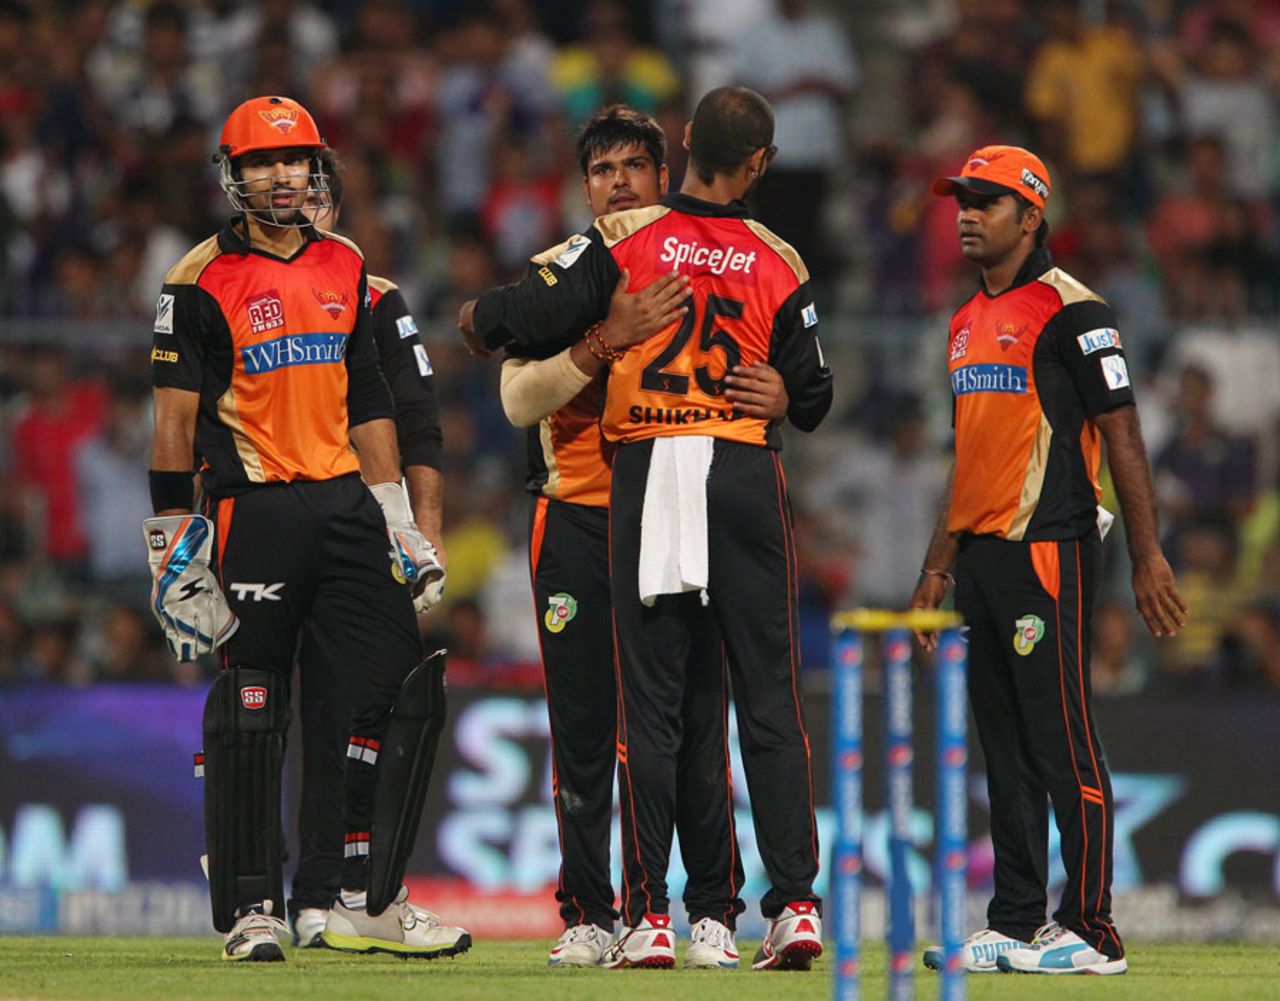 Karn Sharma picked up four wickets, Kolkata Knight Riders v Sunrisers Hyderabad, IPL 2014, Kolkata, May 24, 2014